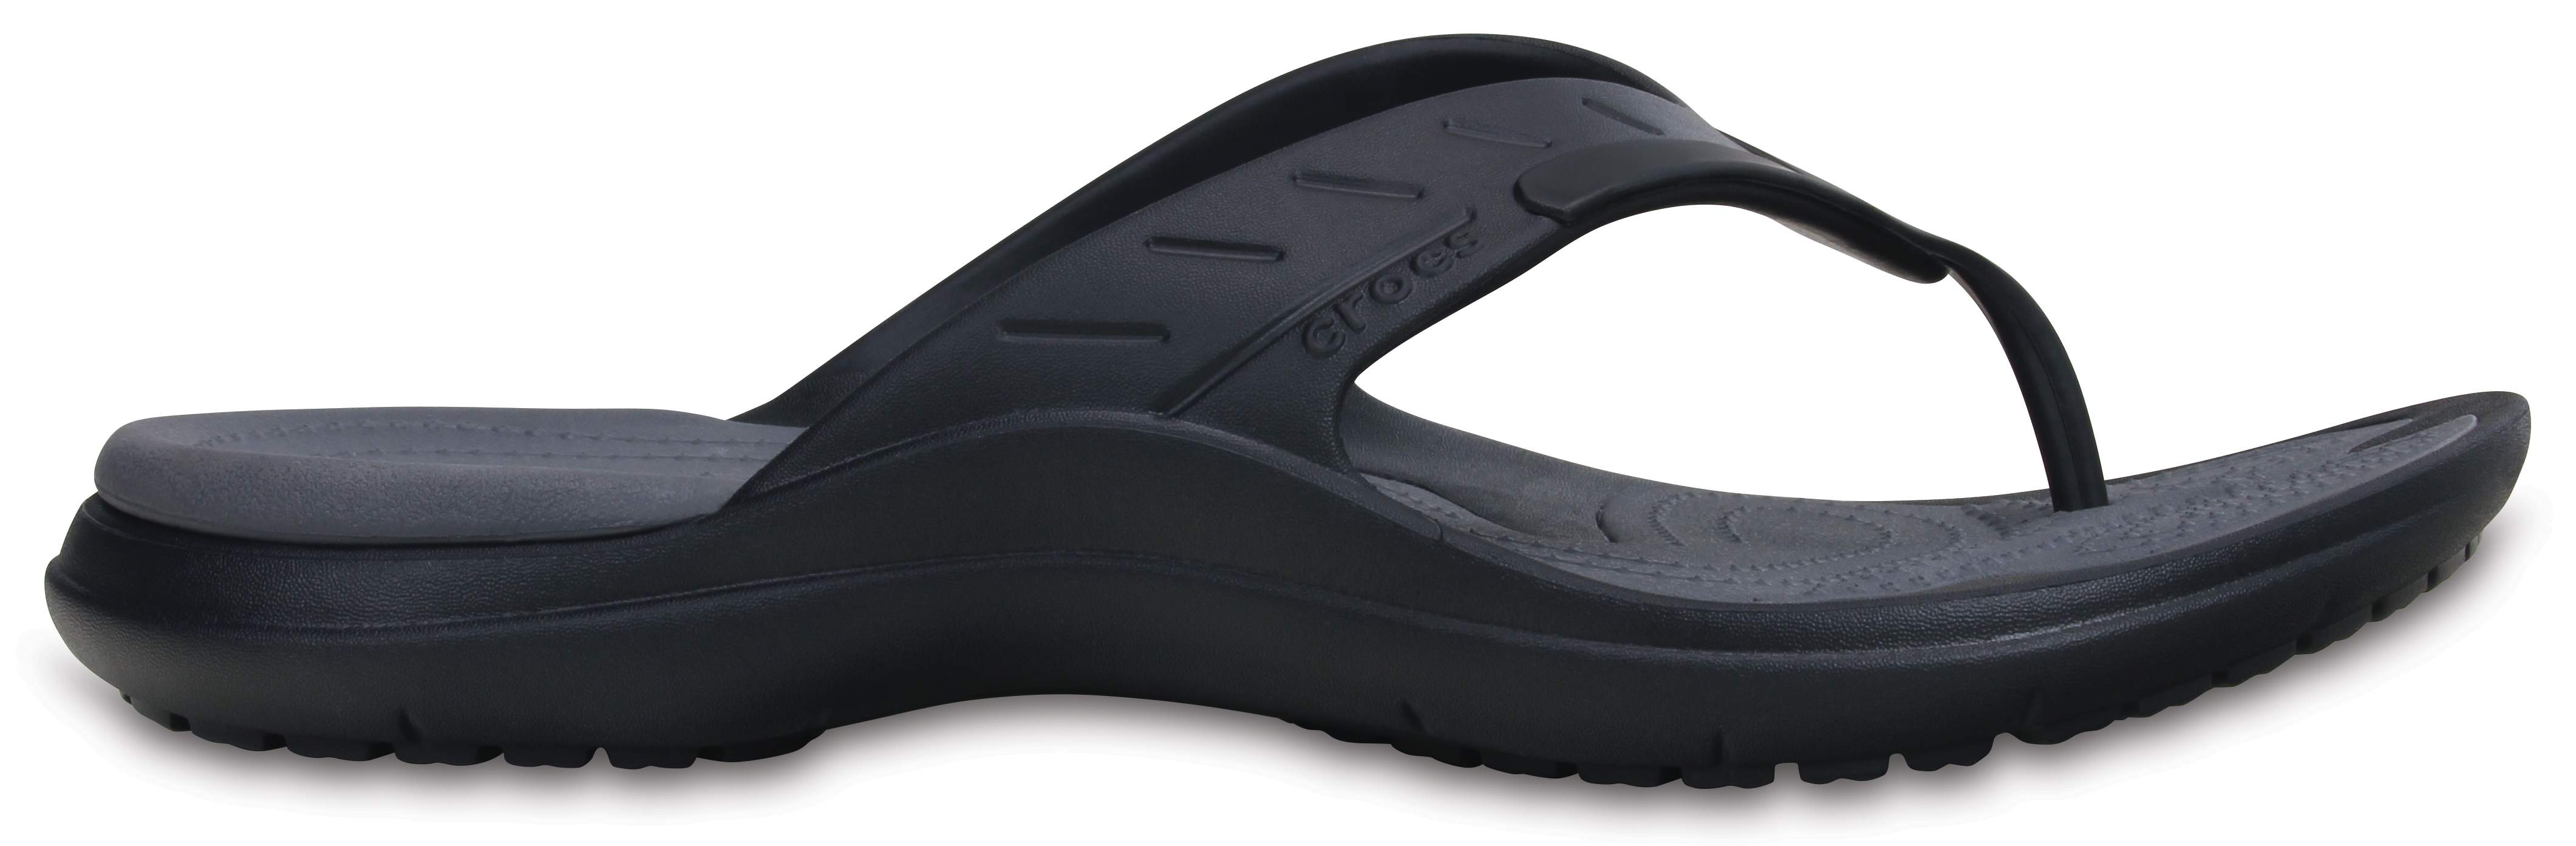 MODI Sport Flip - Crocs